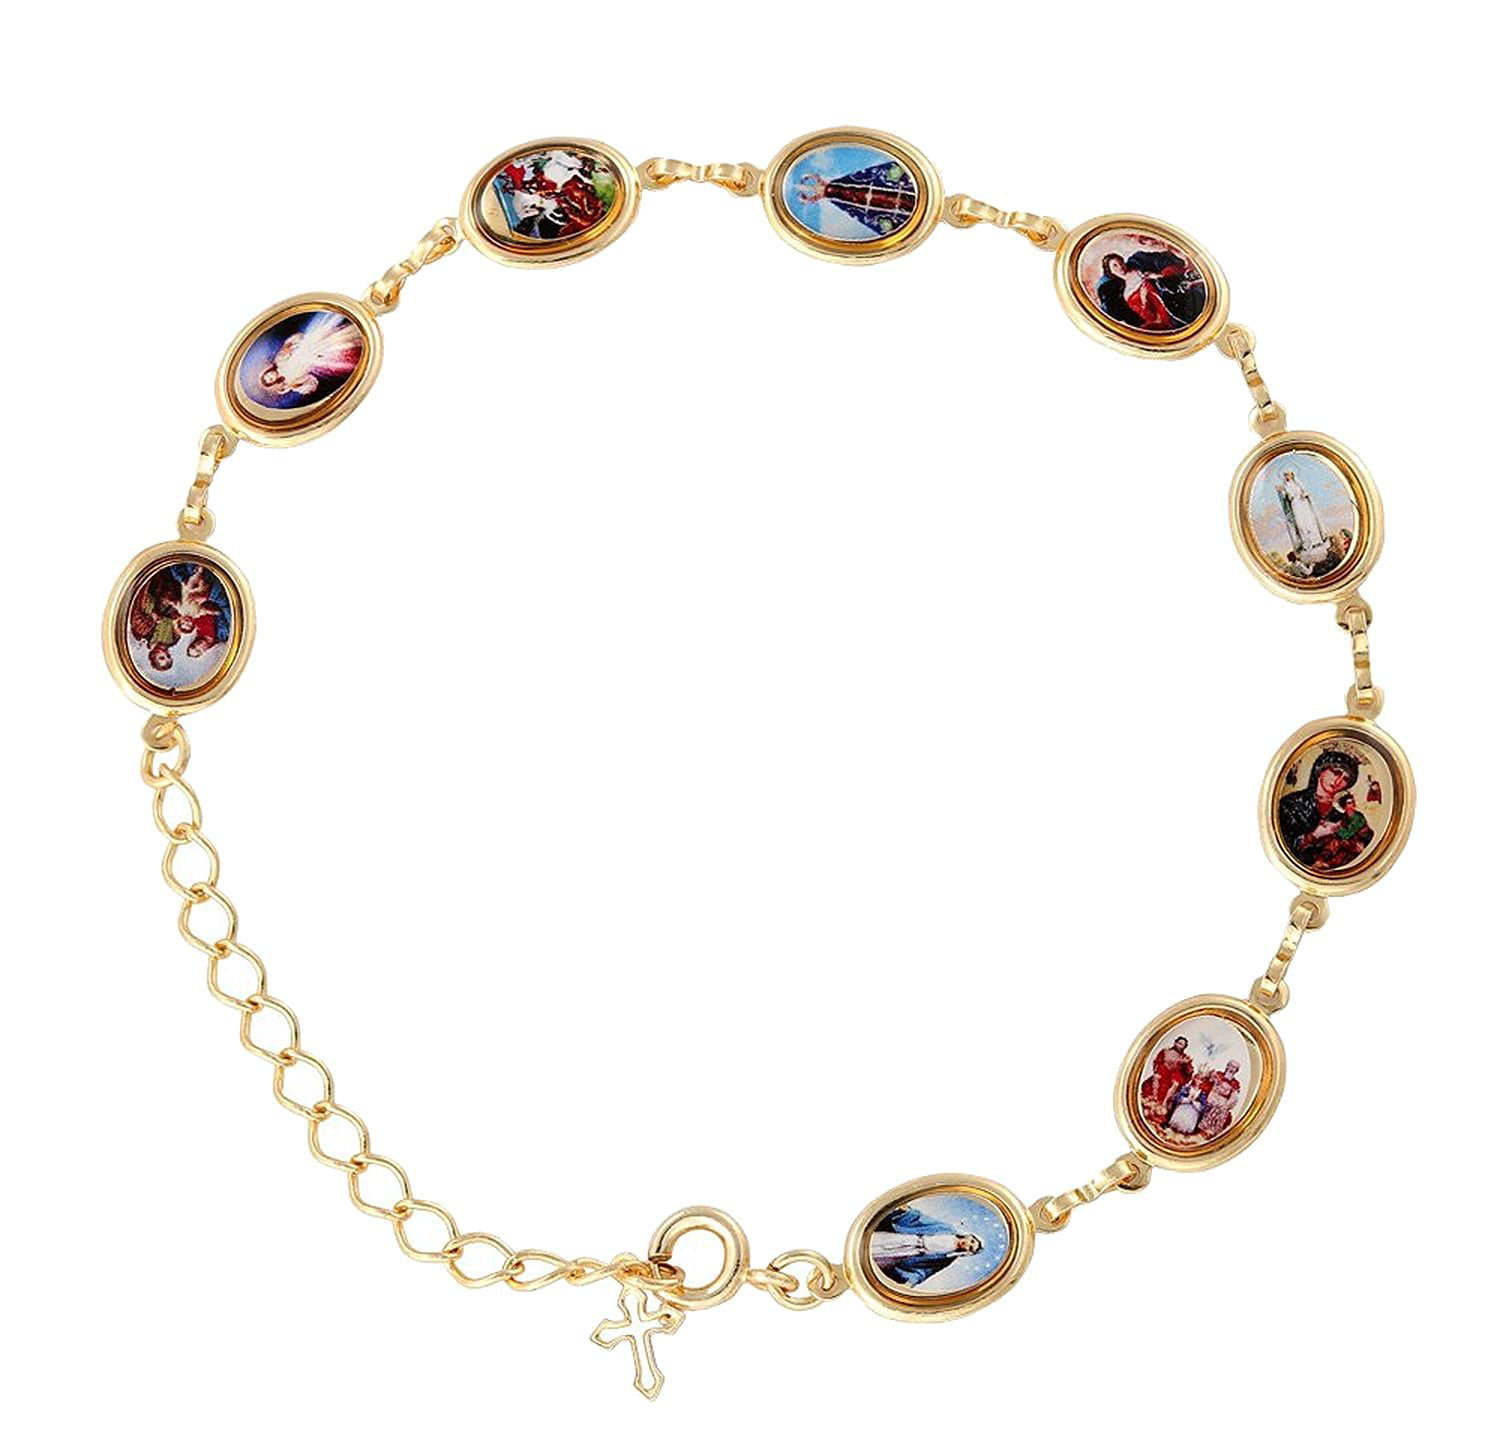 DiamondJewelryNY Eye Hook Bangle Bracelet with a Virgin of The Globe Charm.